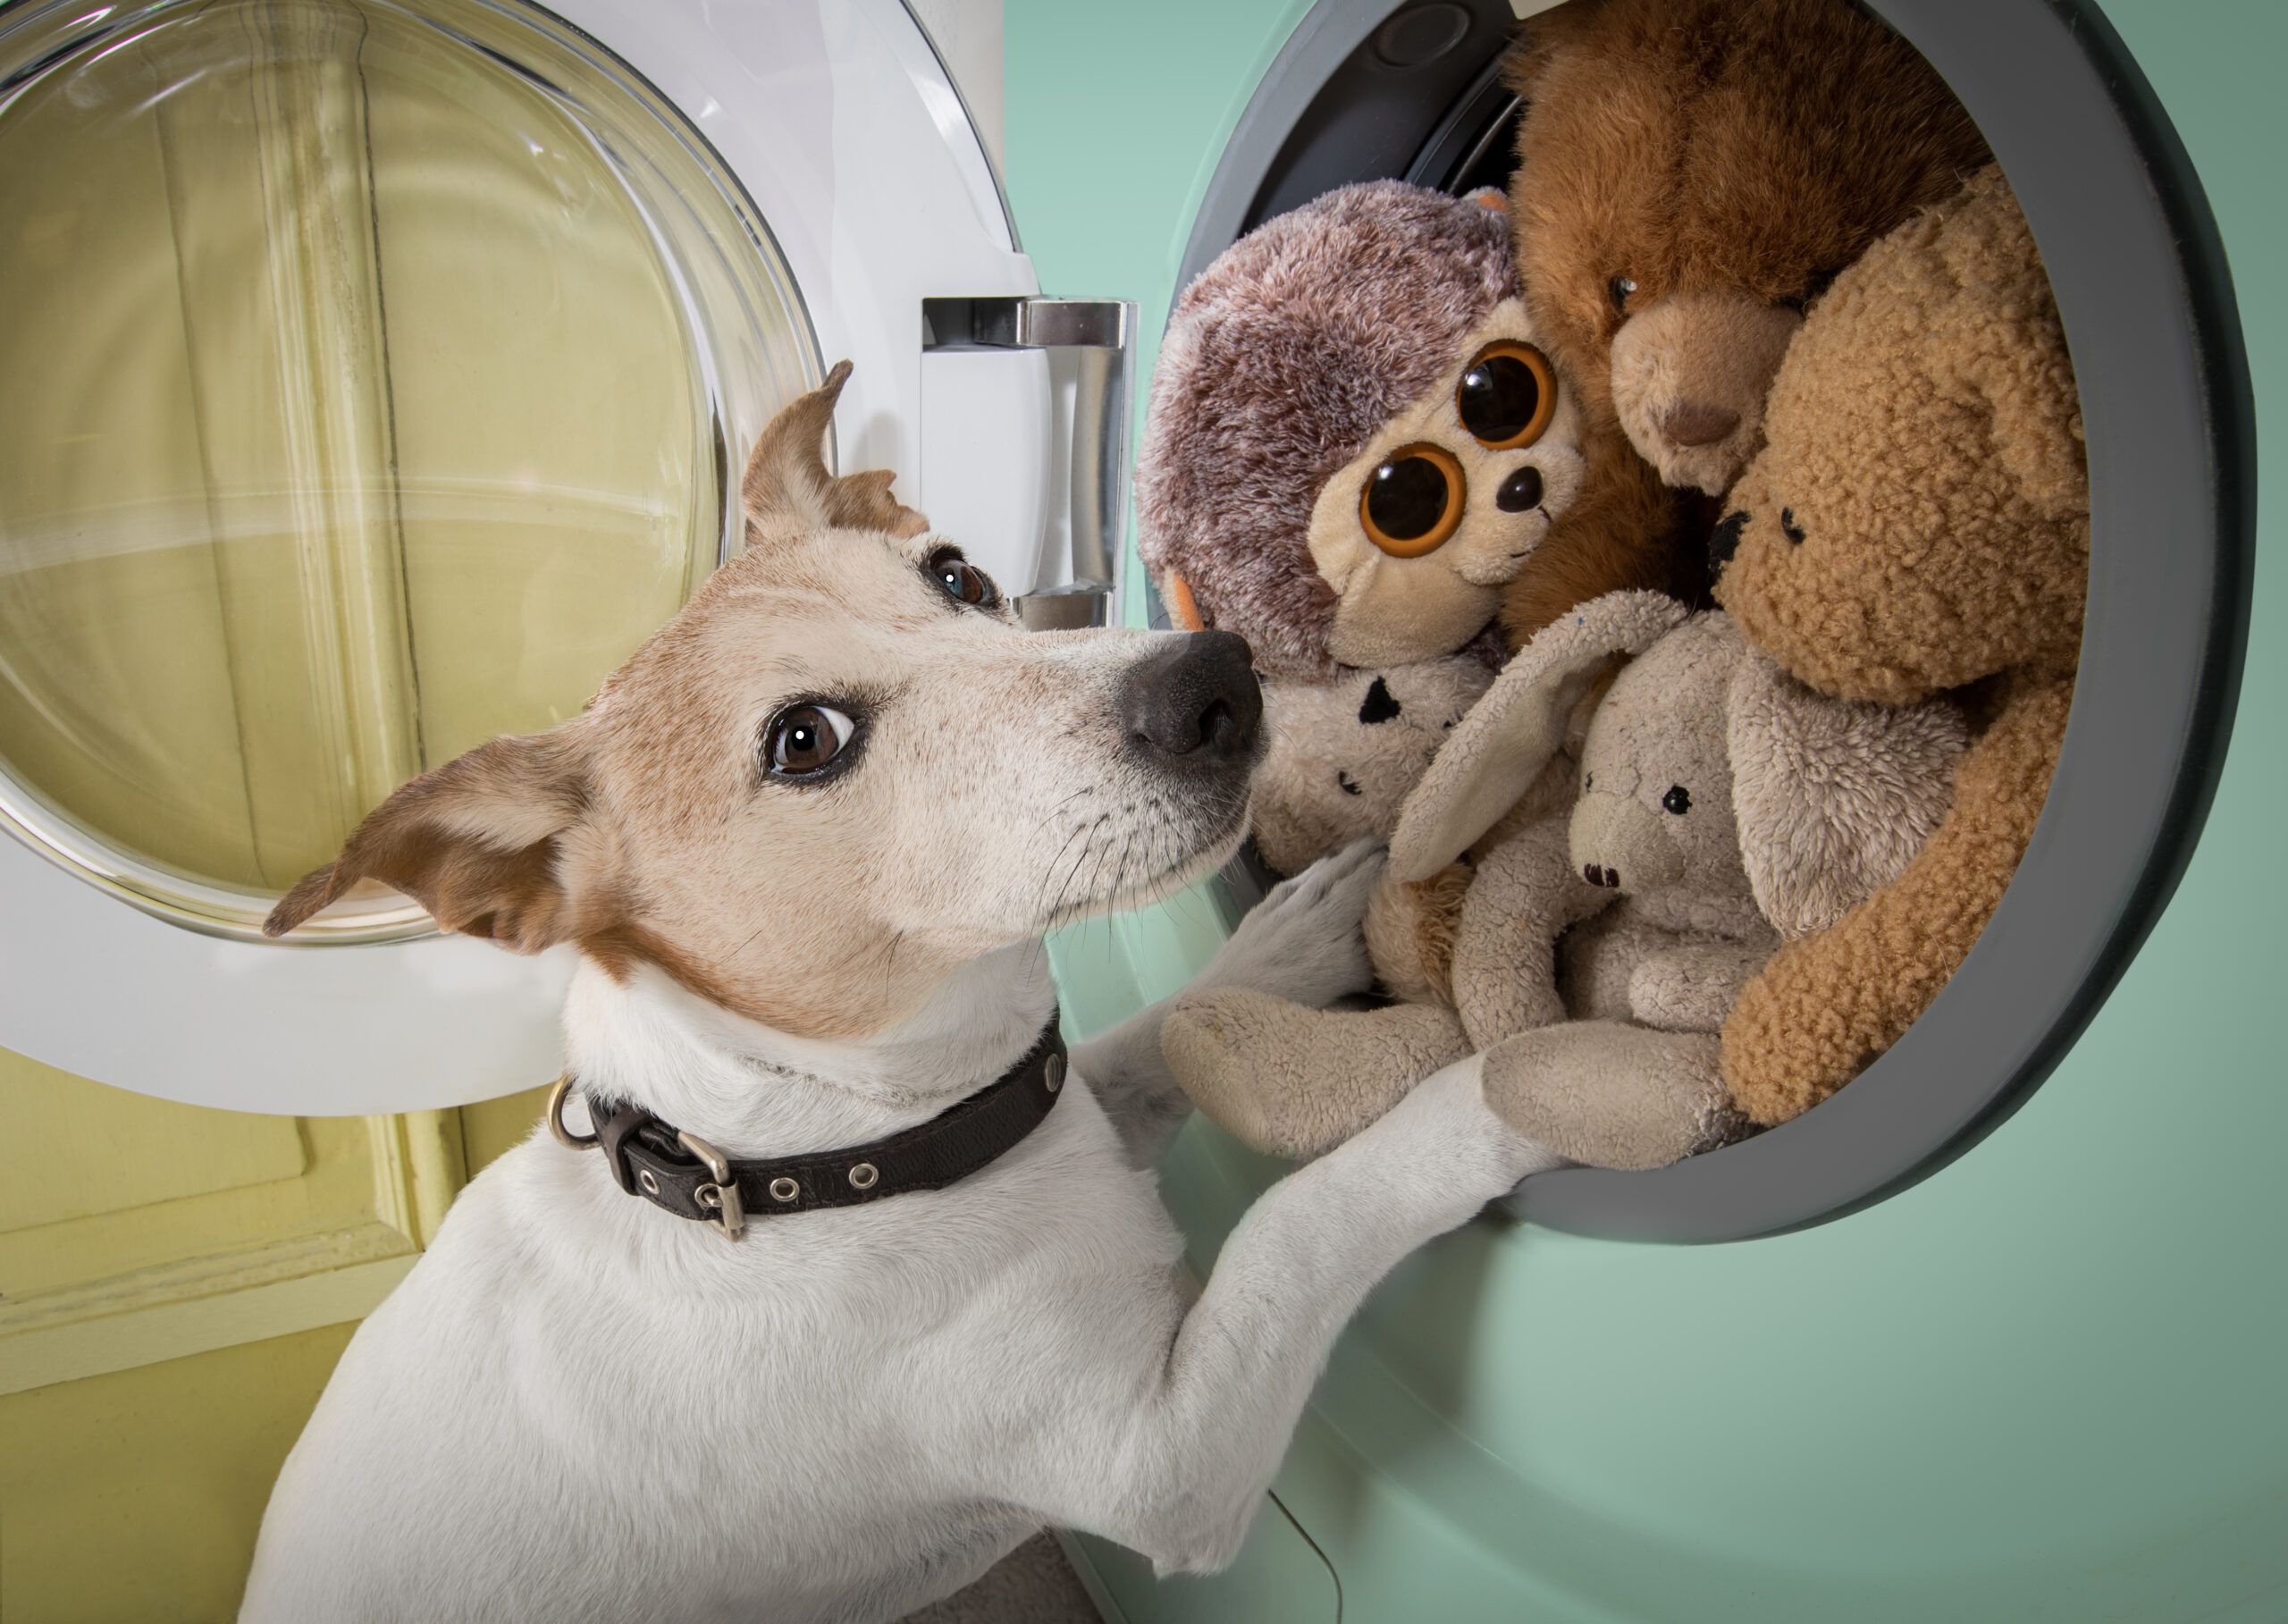 Dog using washing machine to clean toys